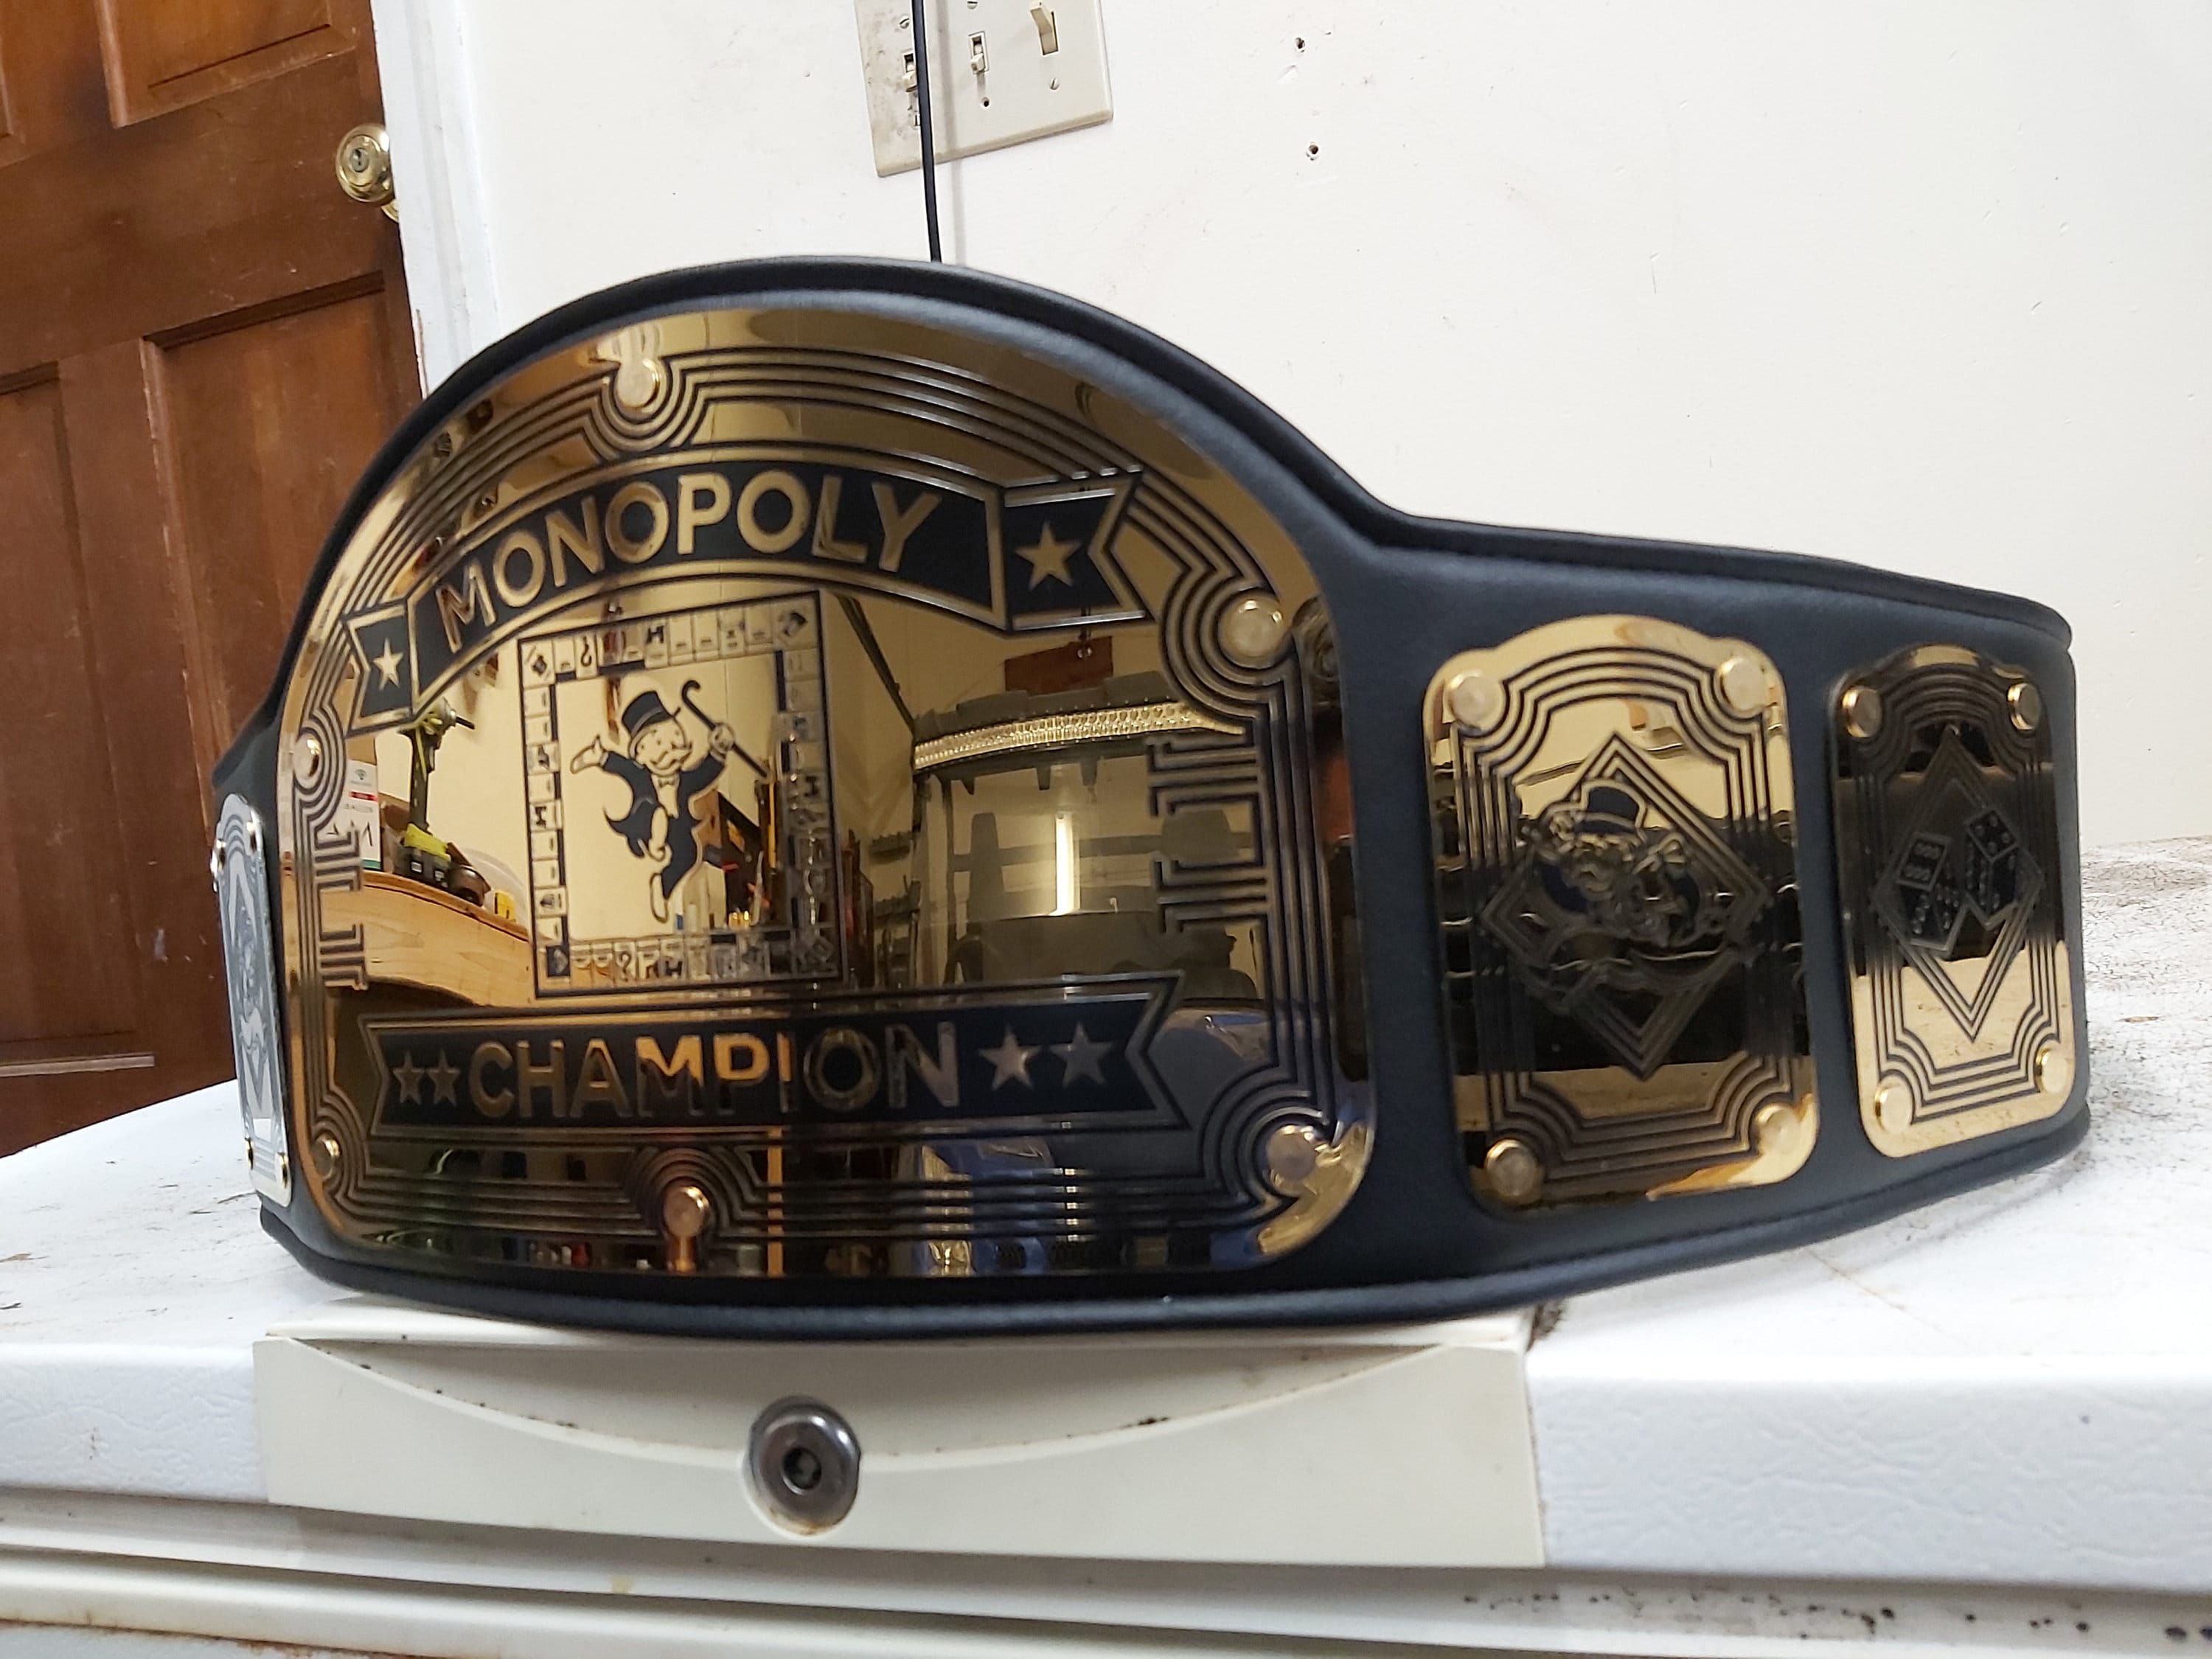 Championship Belt Display Stand